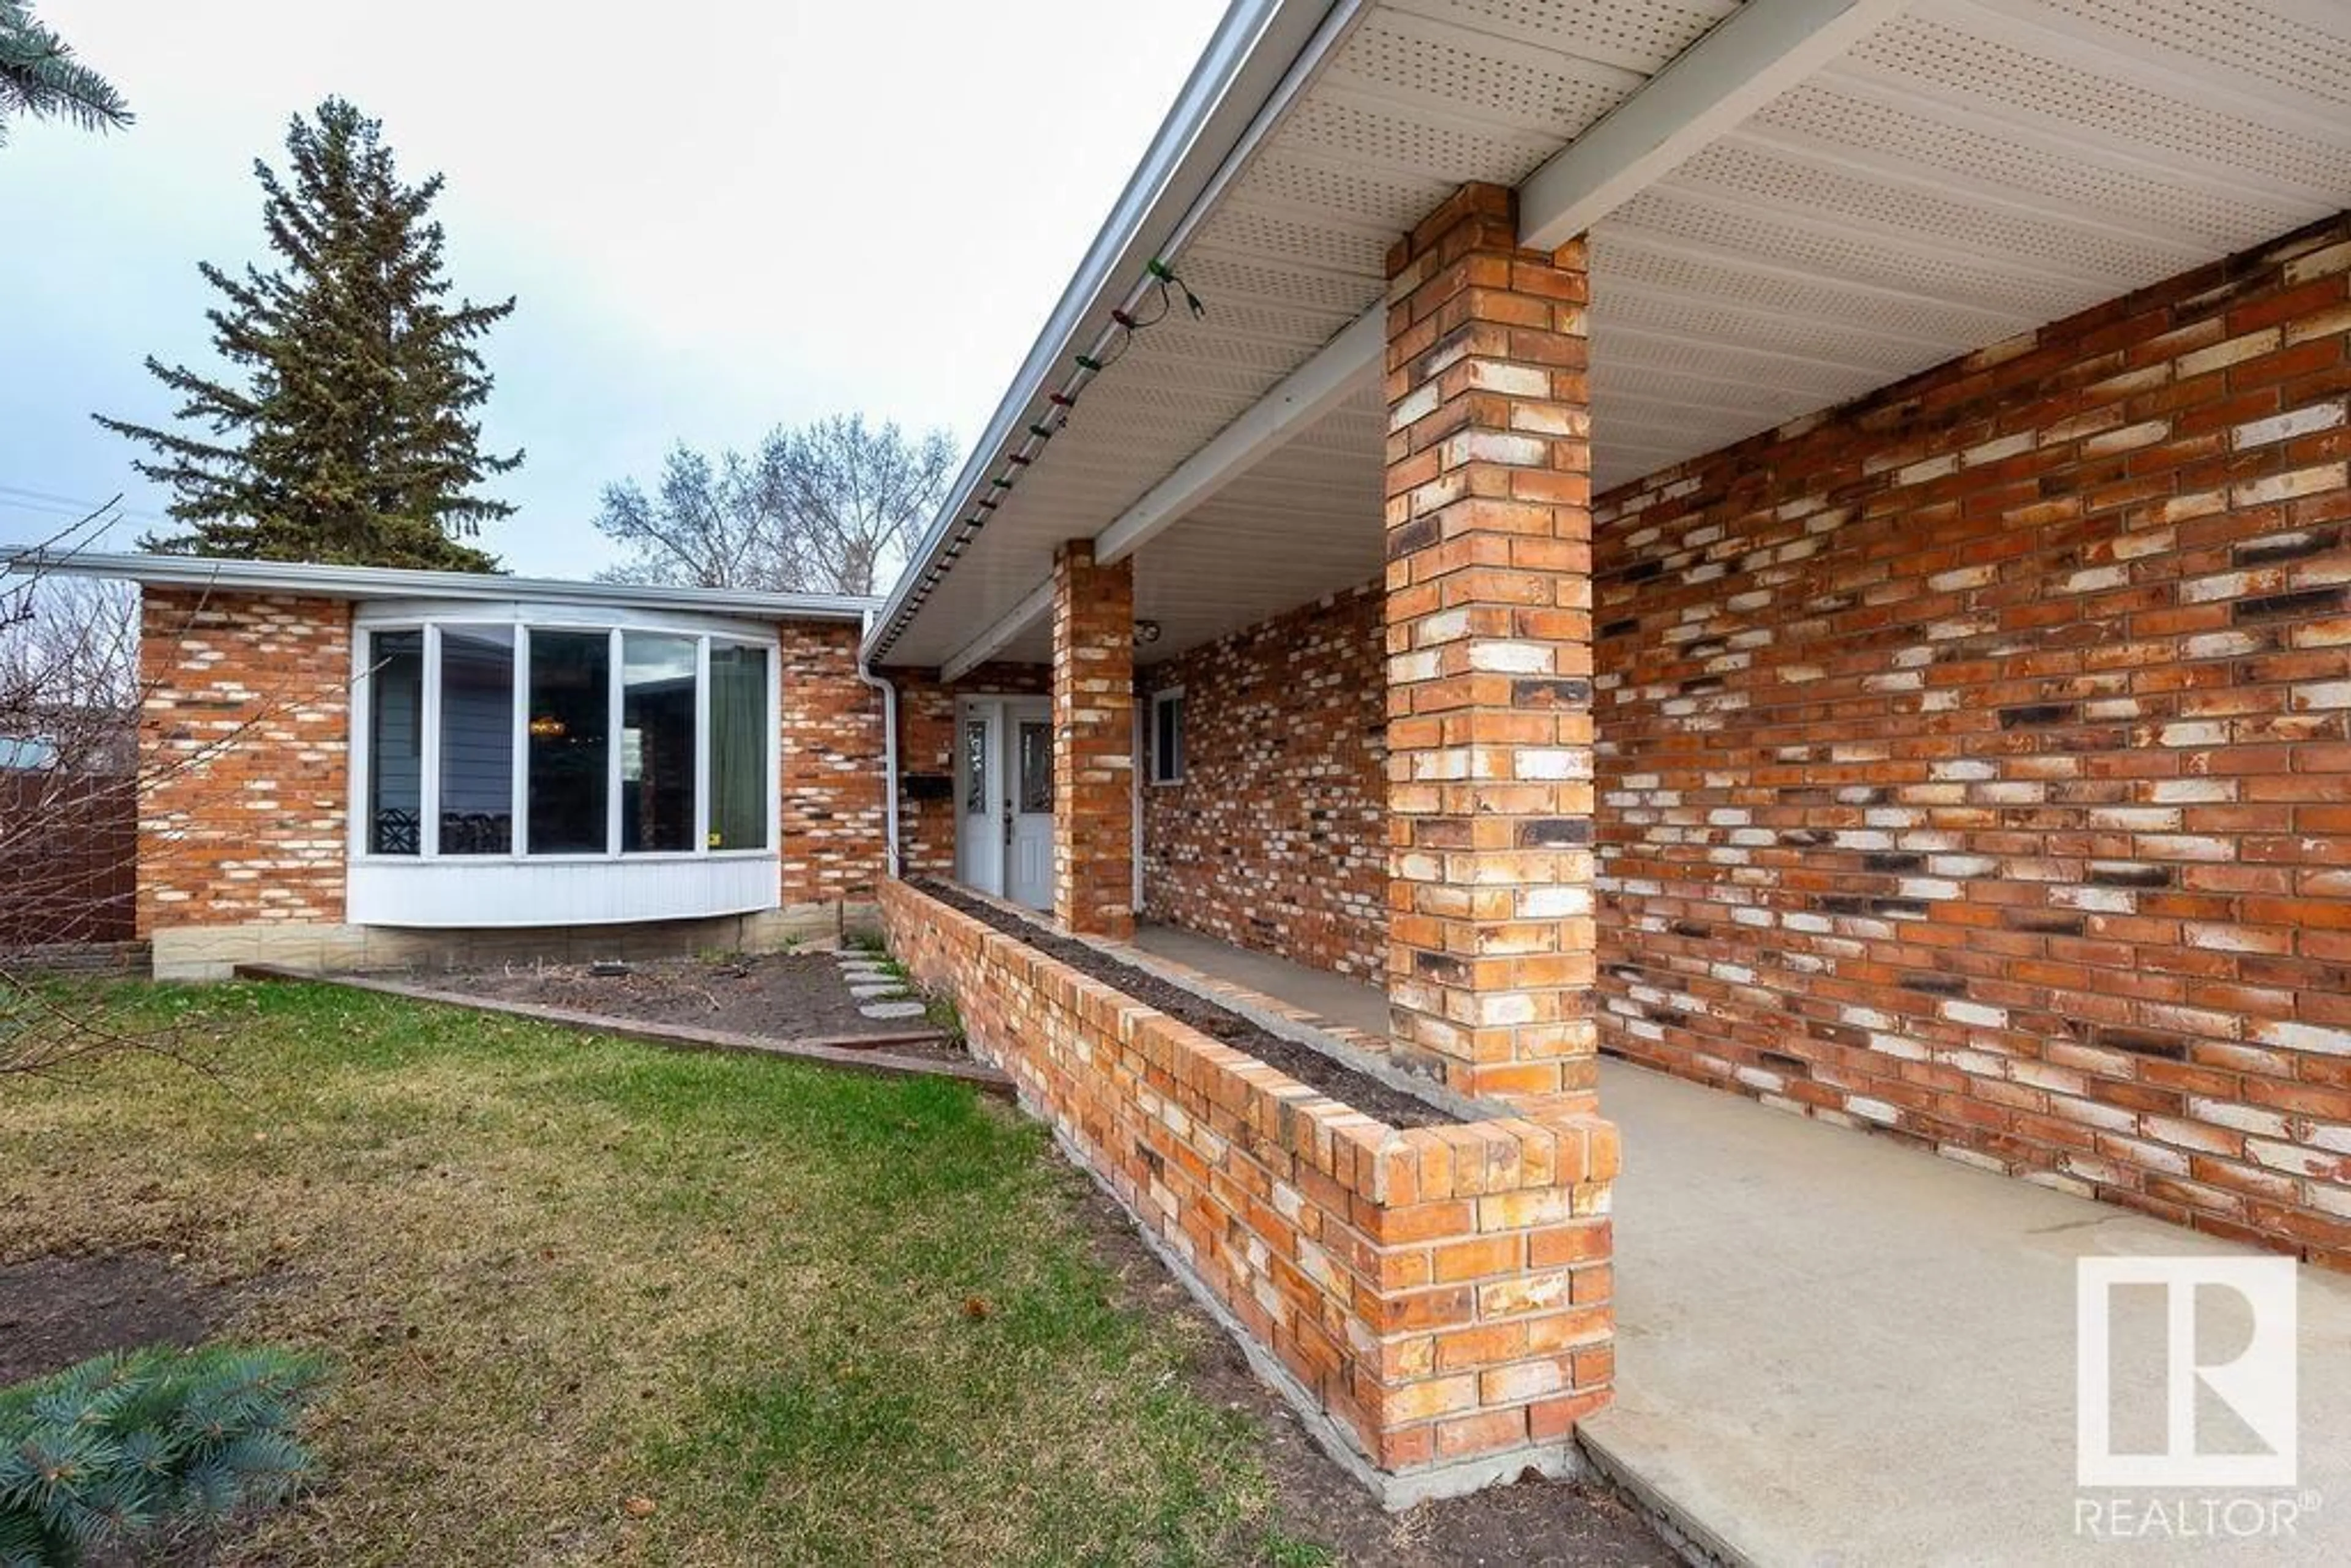 Home with brick exterior material for 9560 143 AV NW, Edmonton Alberta T5E2H3